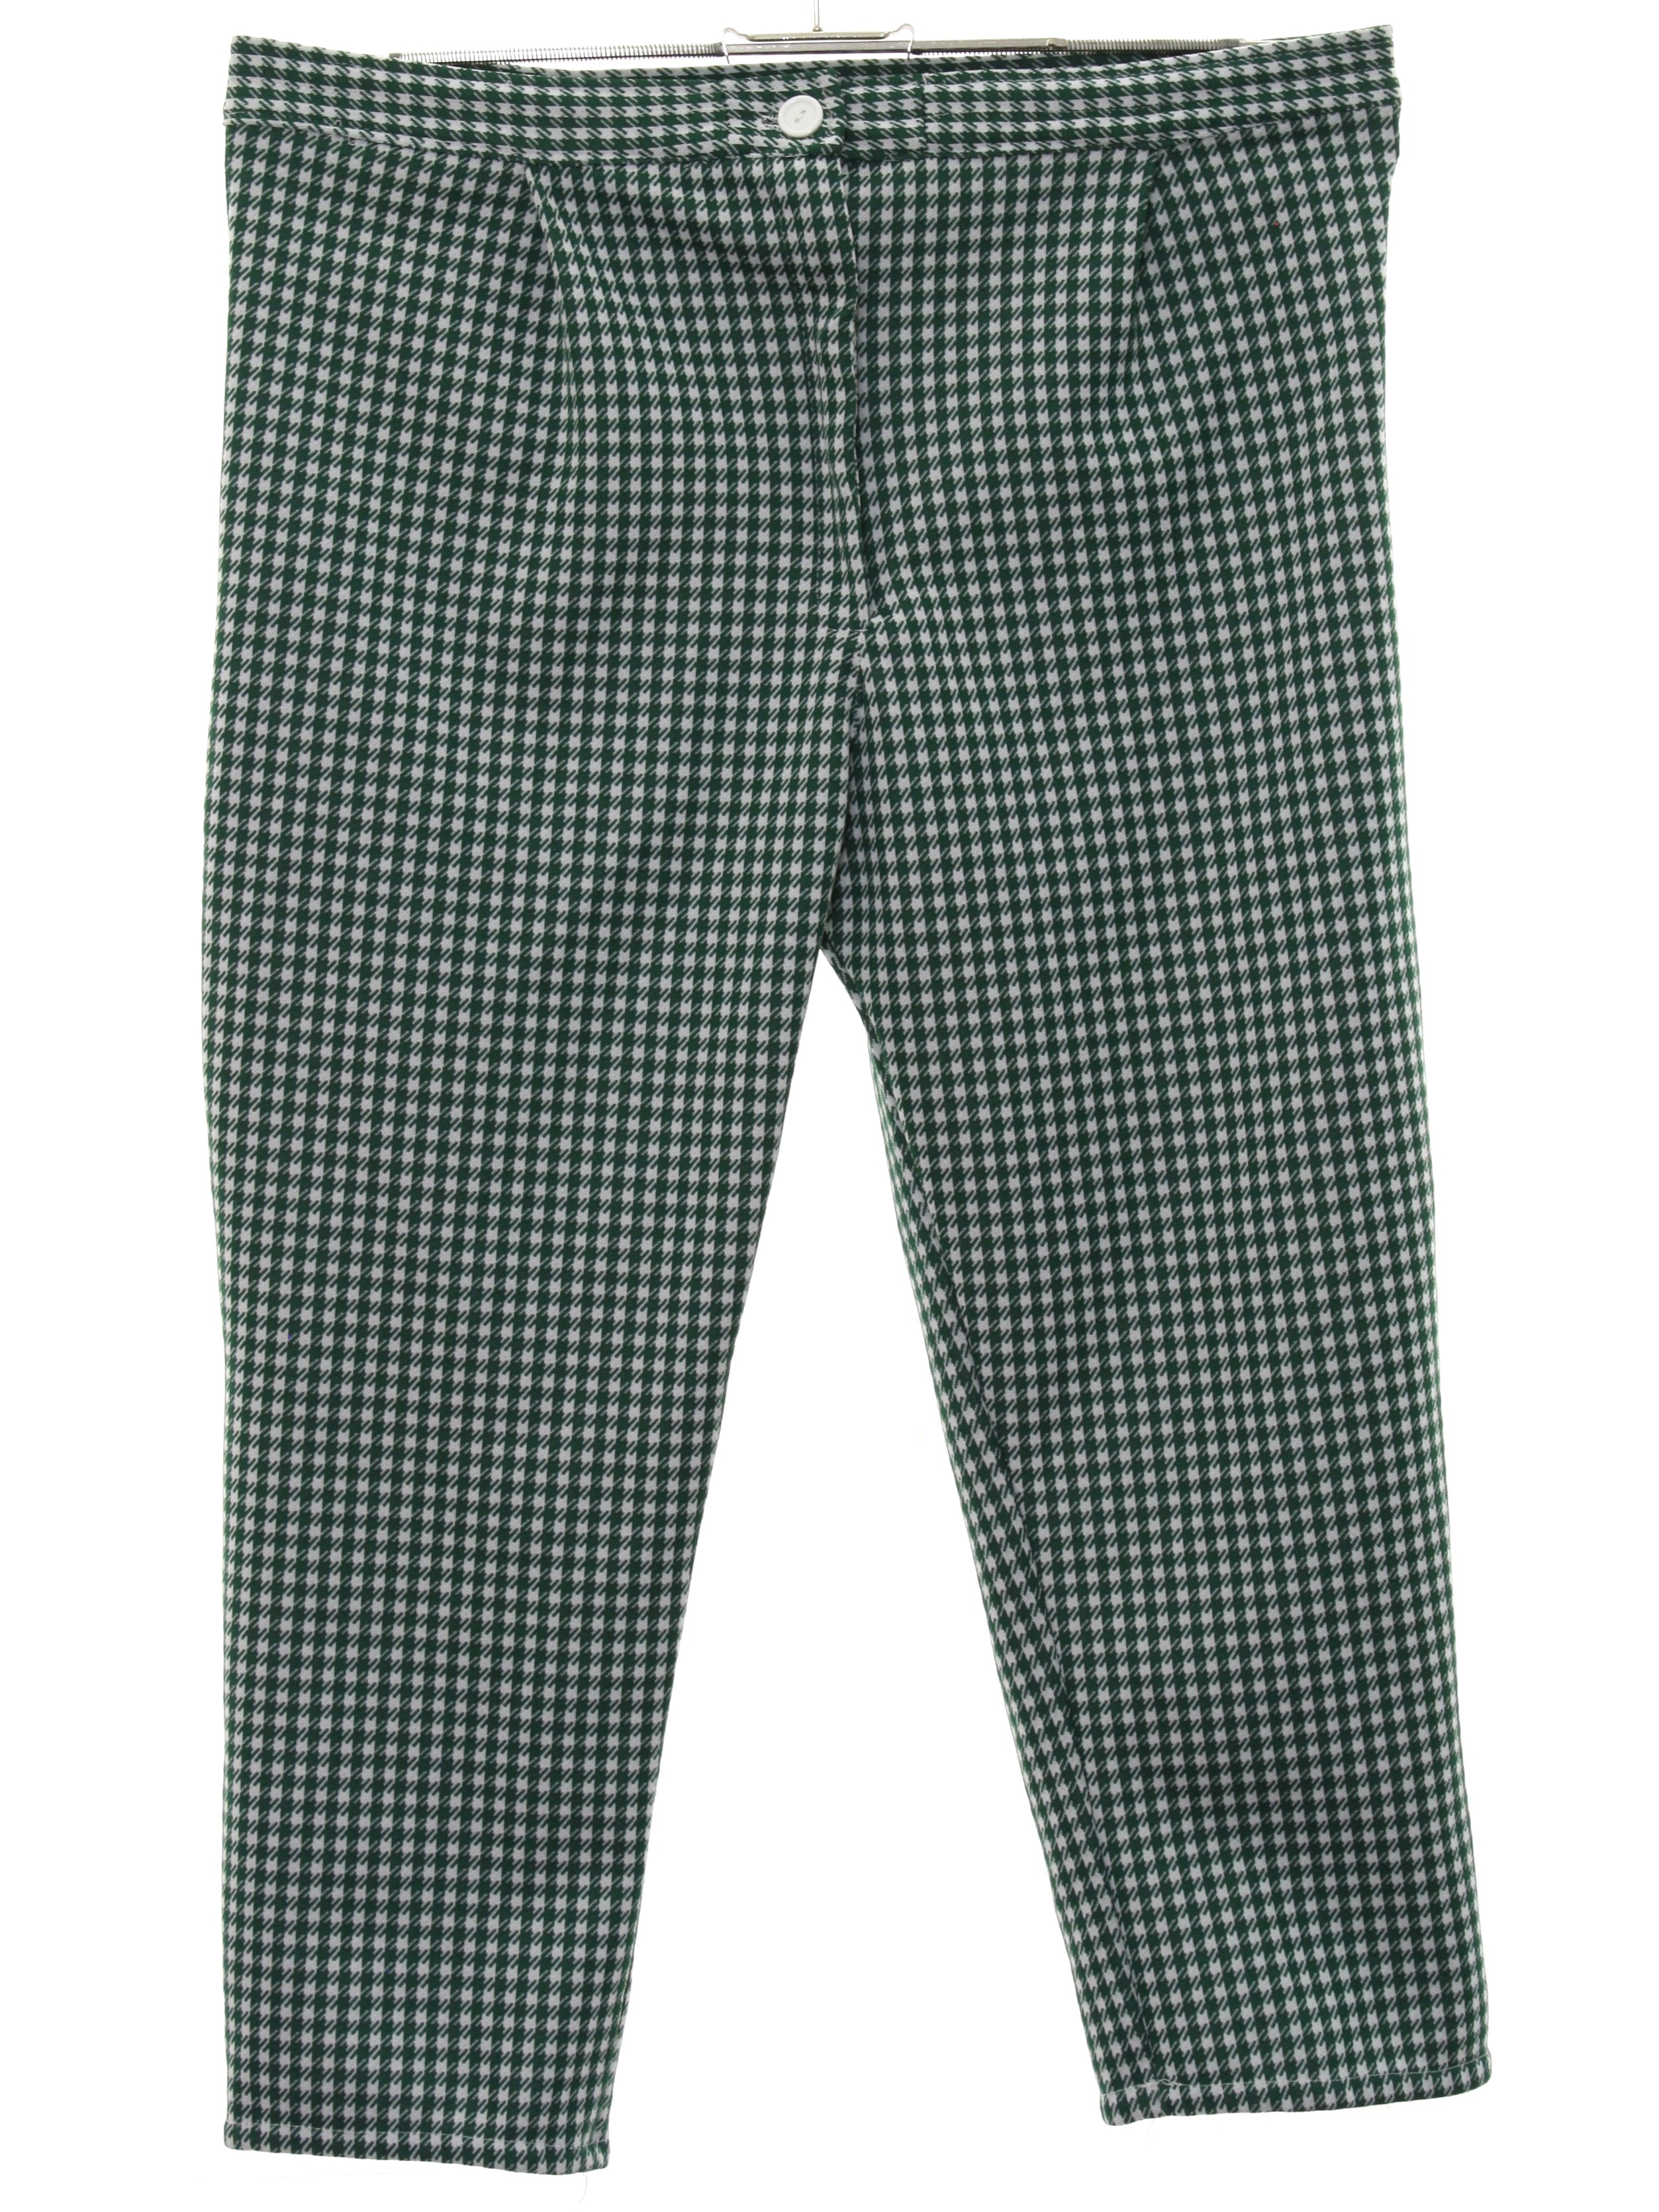 Retro 1970s Pants: 70s -Home Sewn- Womens dark green and white ...